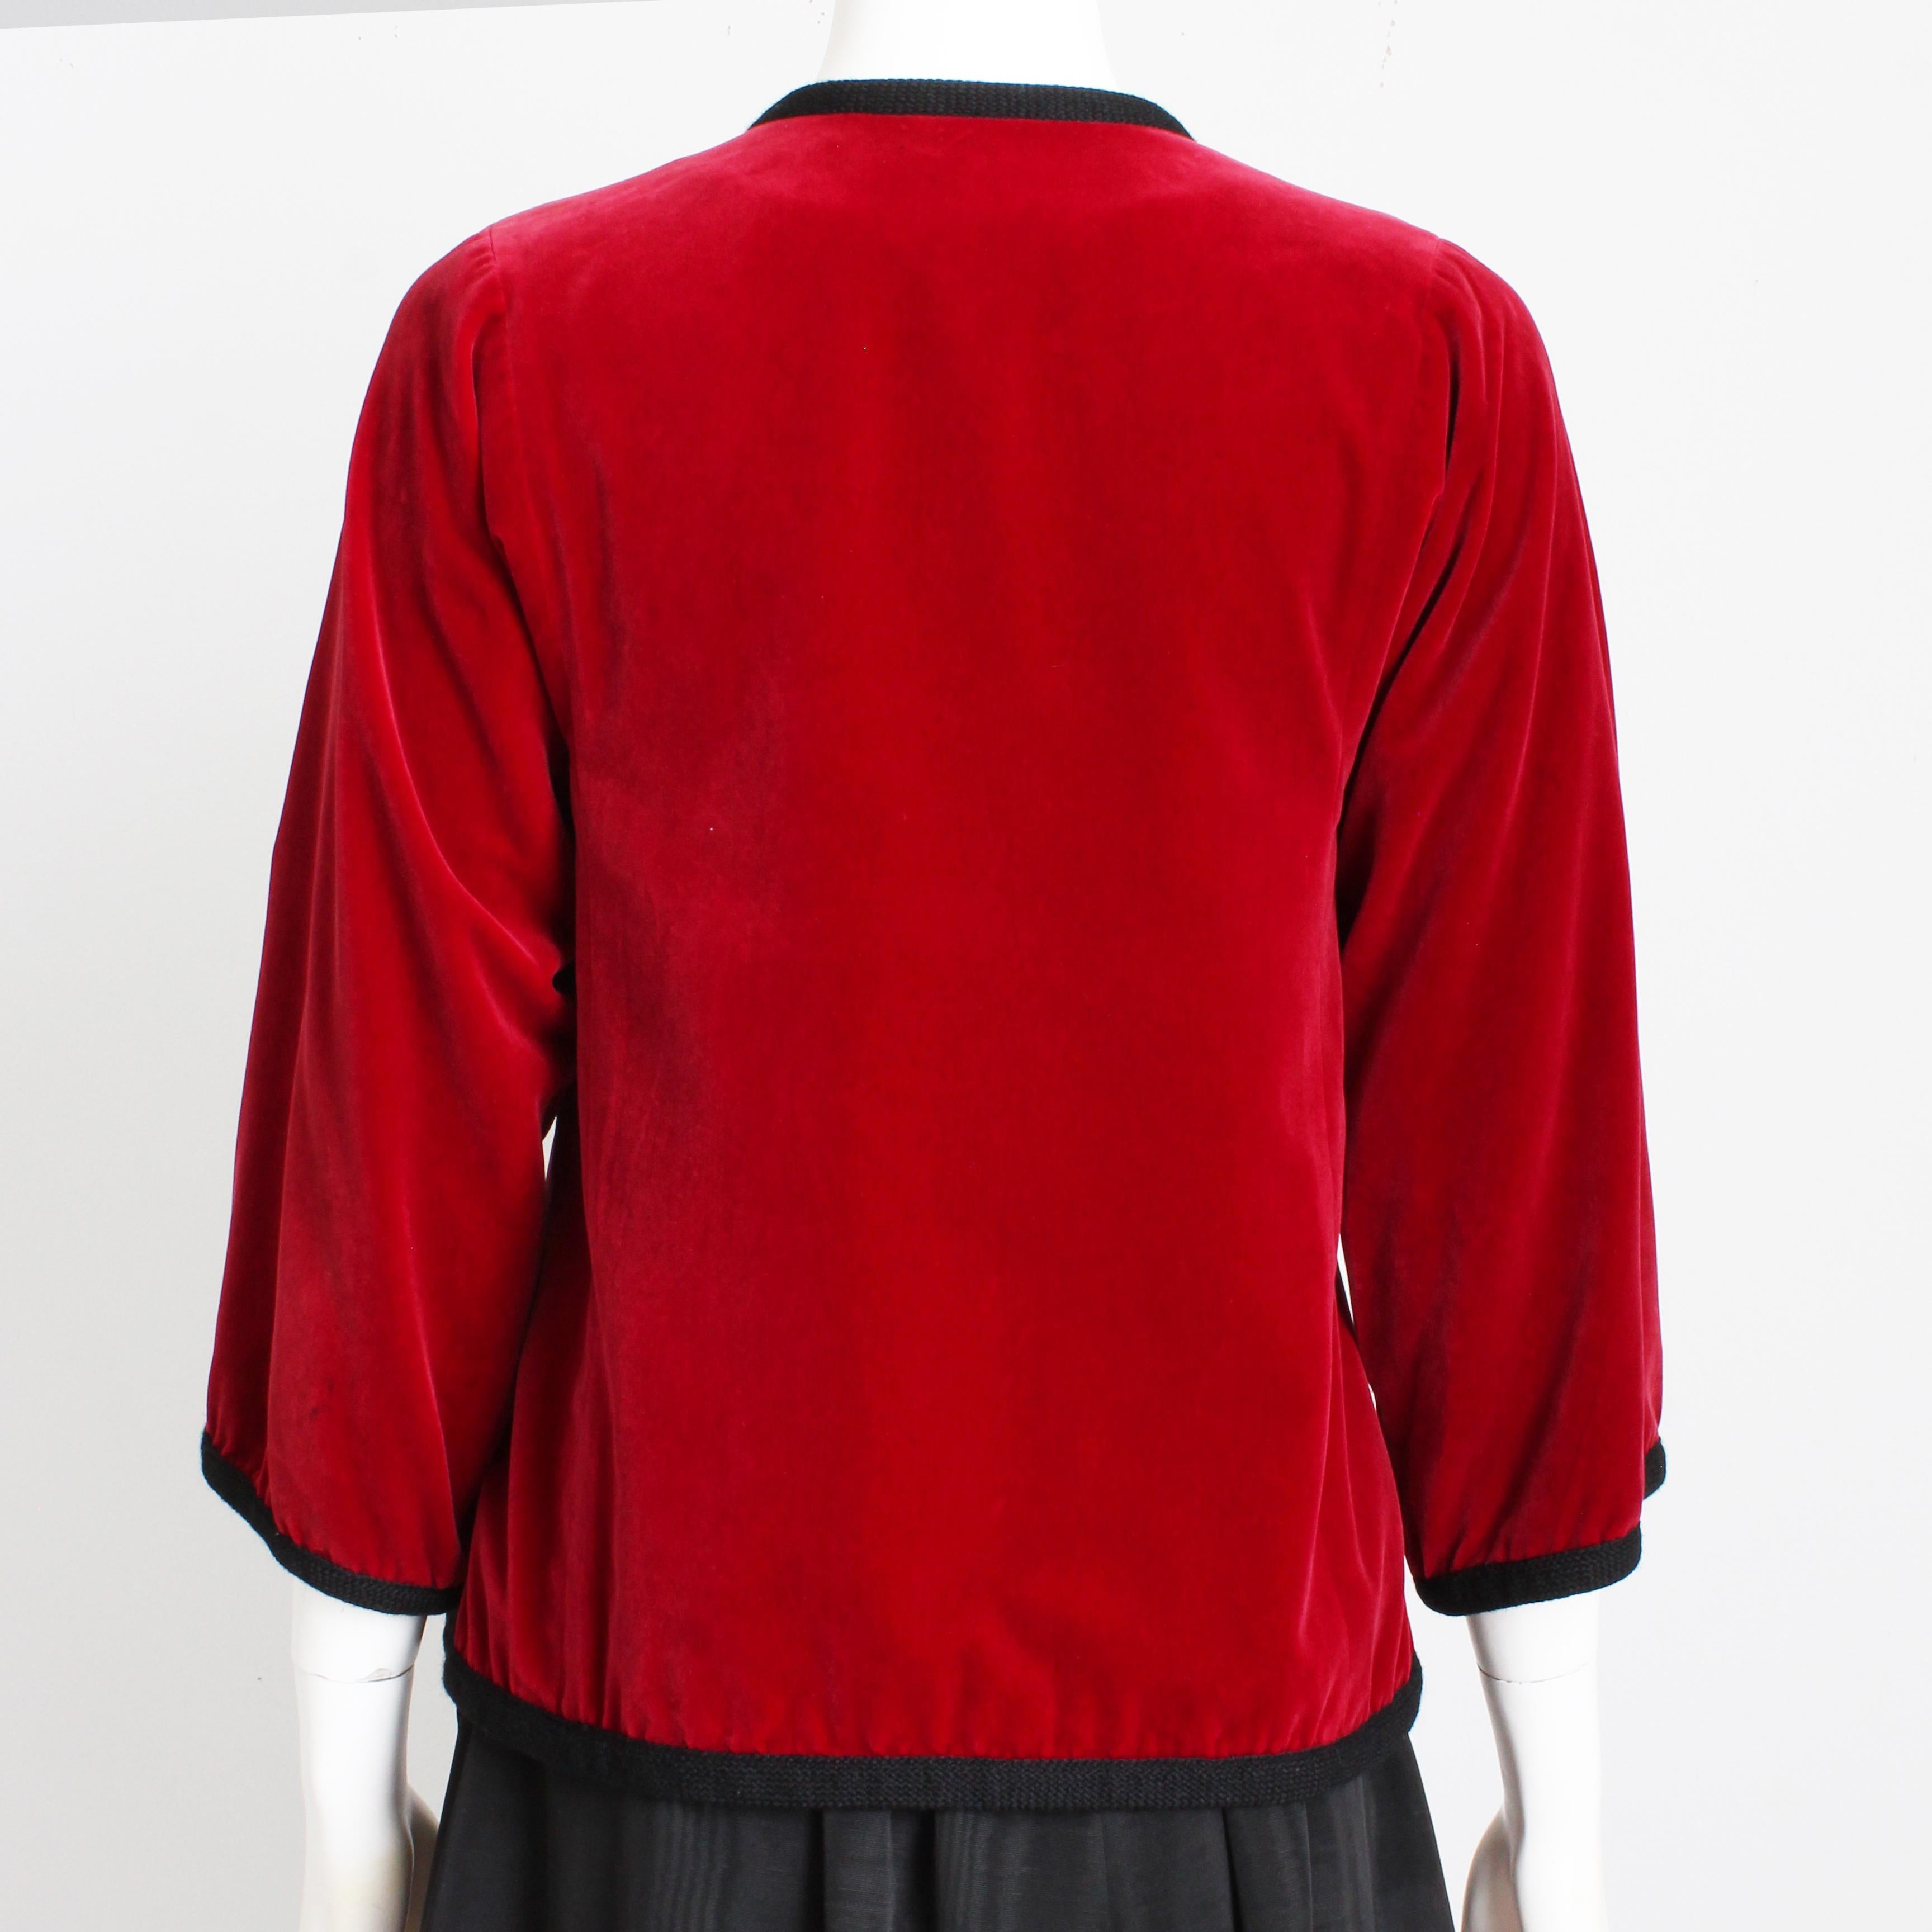 Yves Saint Laurent Jacket Red Velvet Black Trim Ballet Russes Vintage 70s Sz 38 For Sale 3